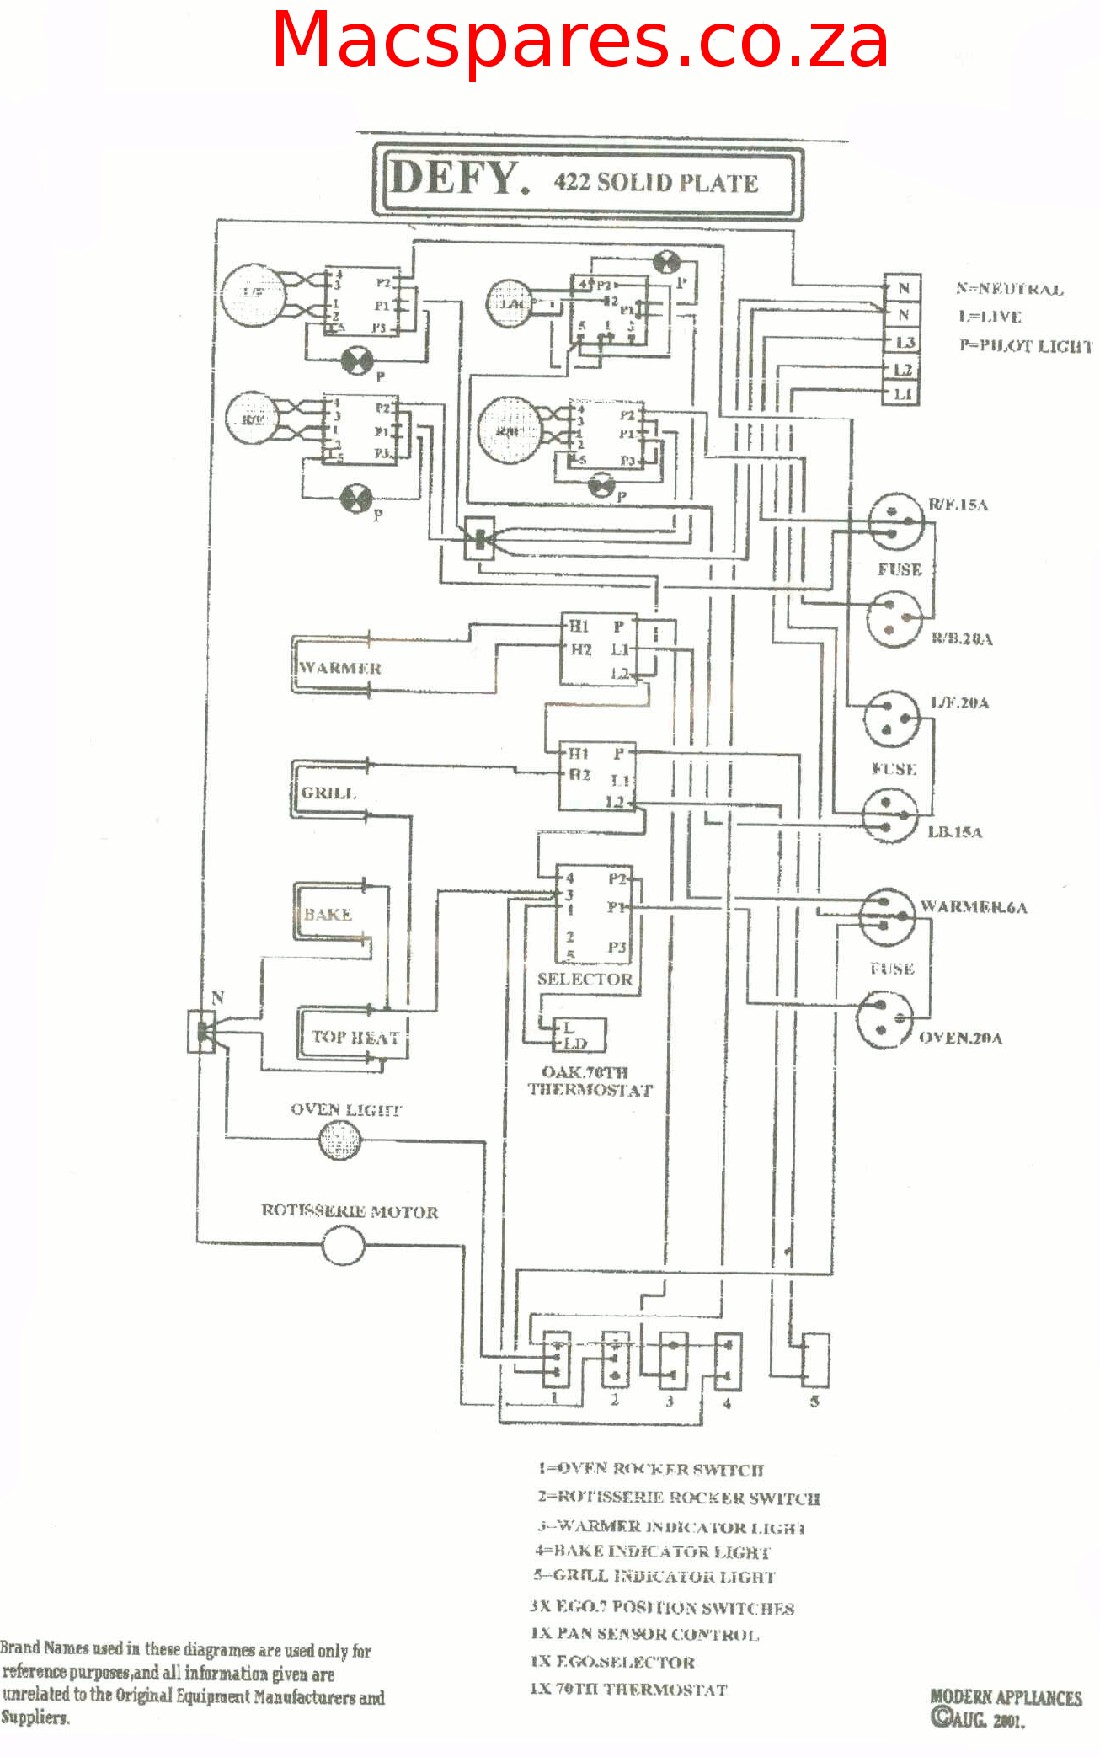 Wiring Diagrams Stoves Macspares Wholesale Spare Parts For Diagram GE Range Electrical Diagram Stove Wiring Diagram